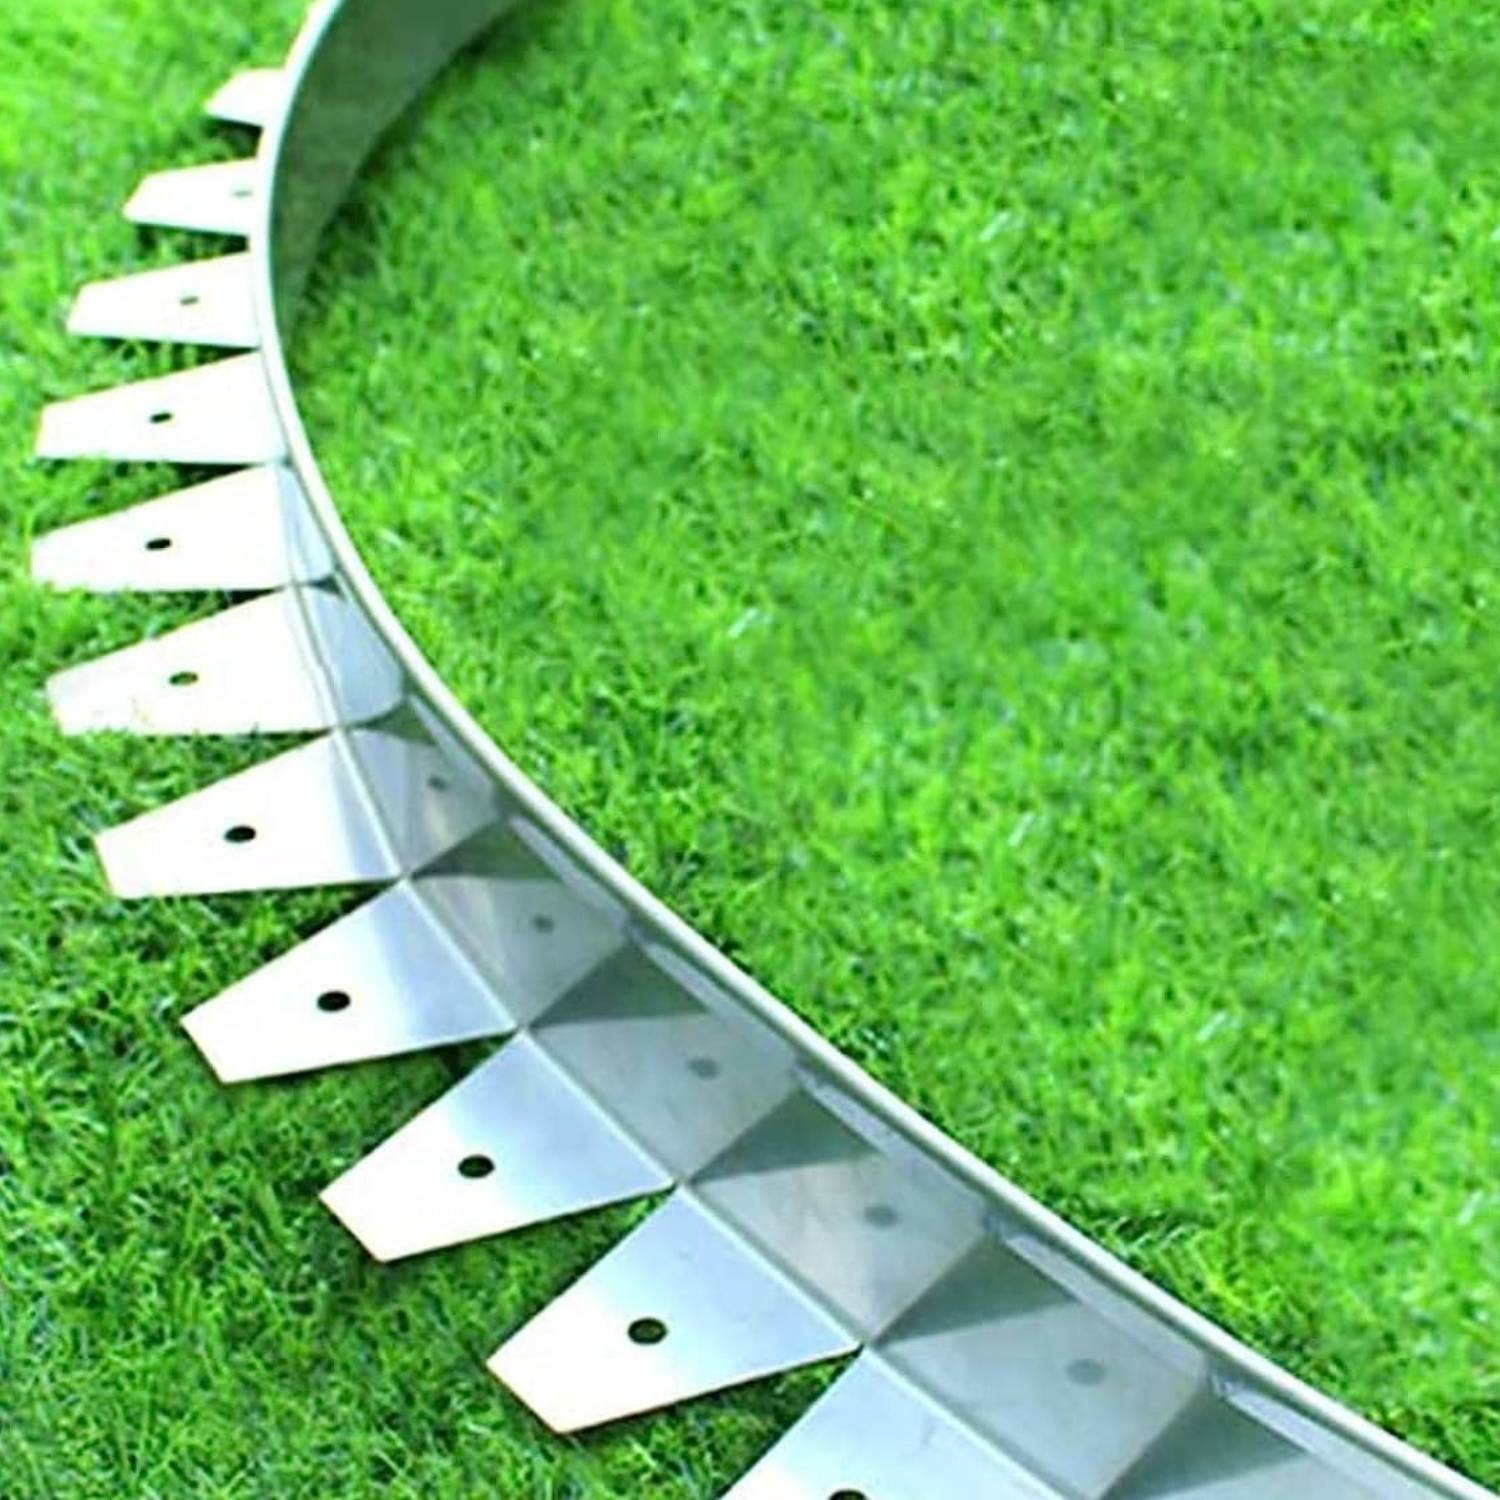 buy stainless steel lawn edge online